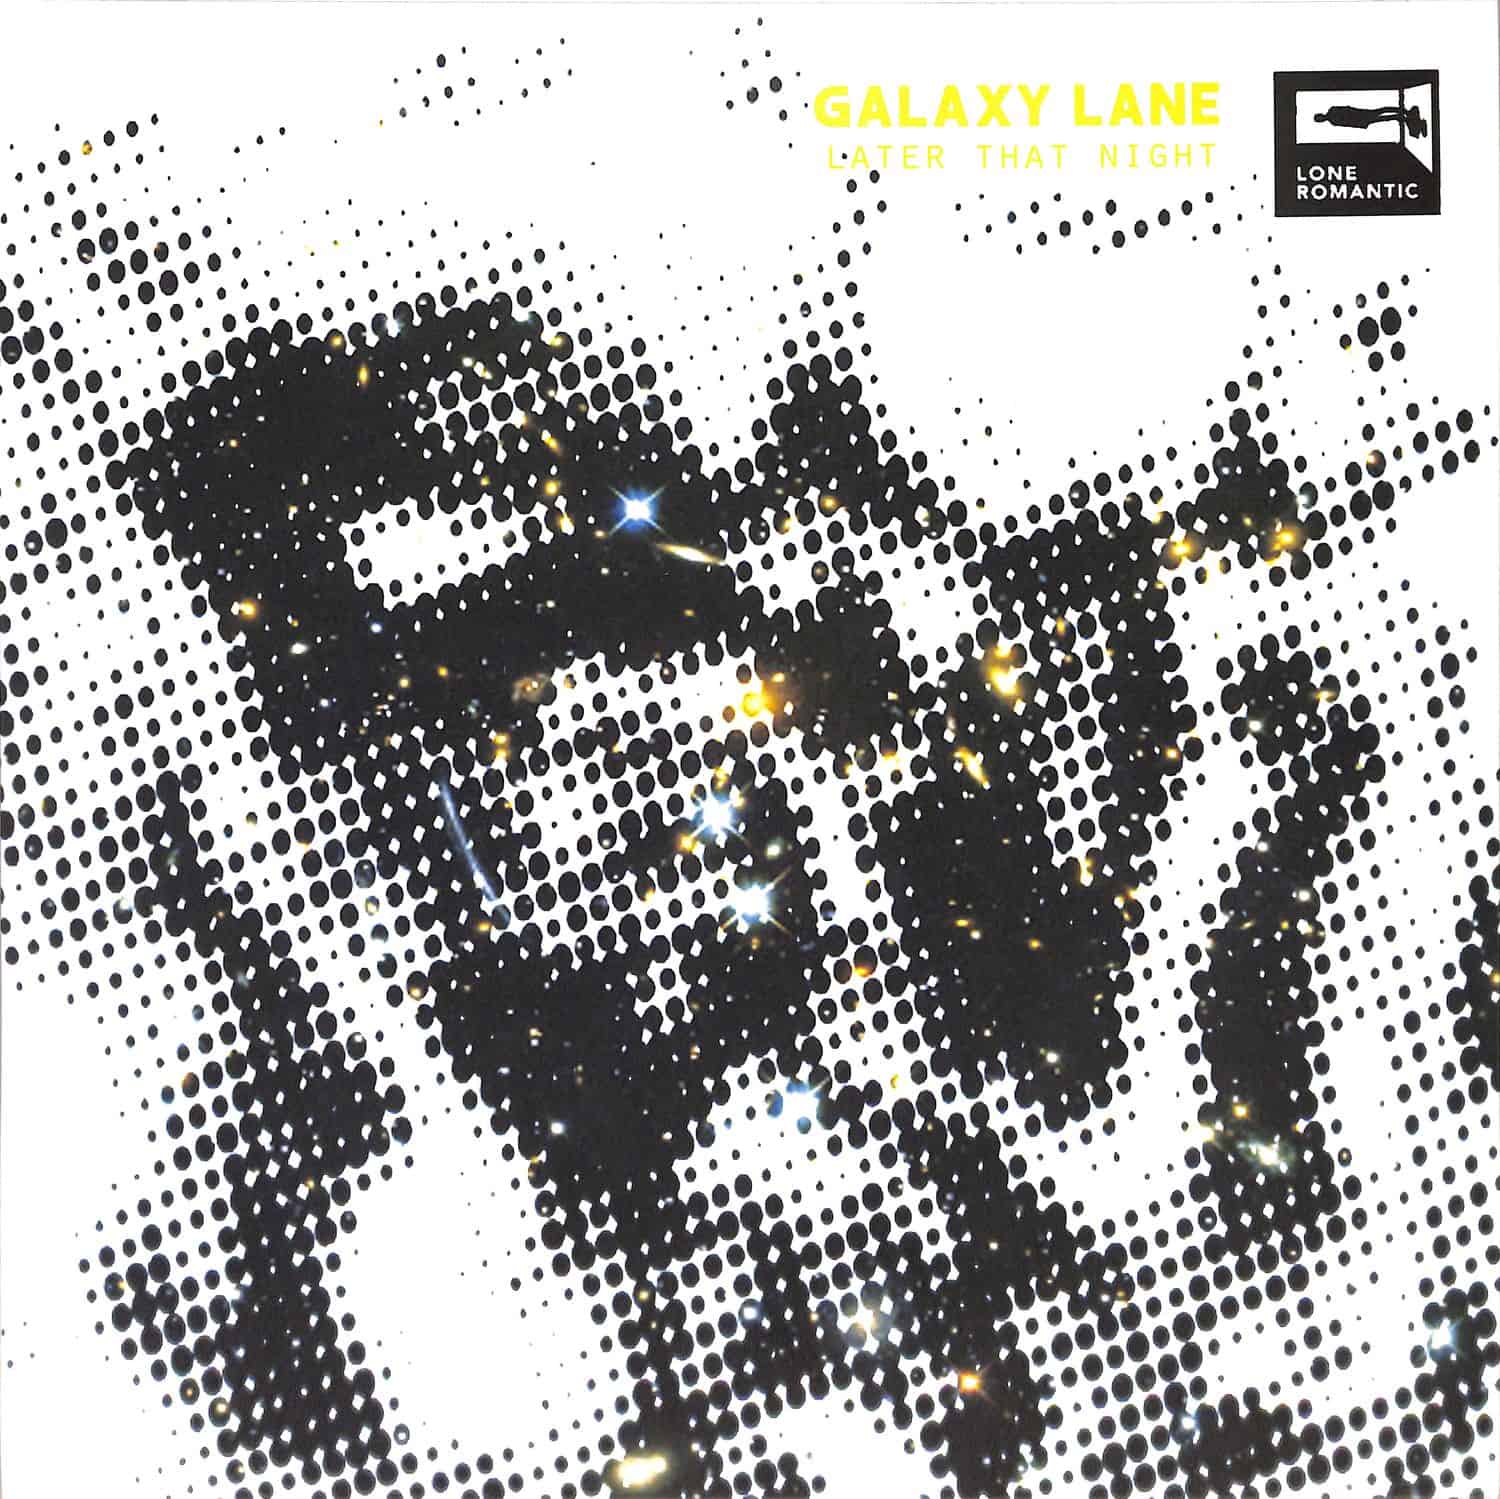 Galaxy Lane - LATER THAT NIGHT